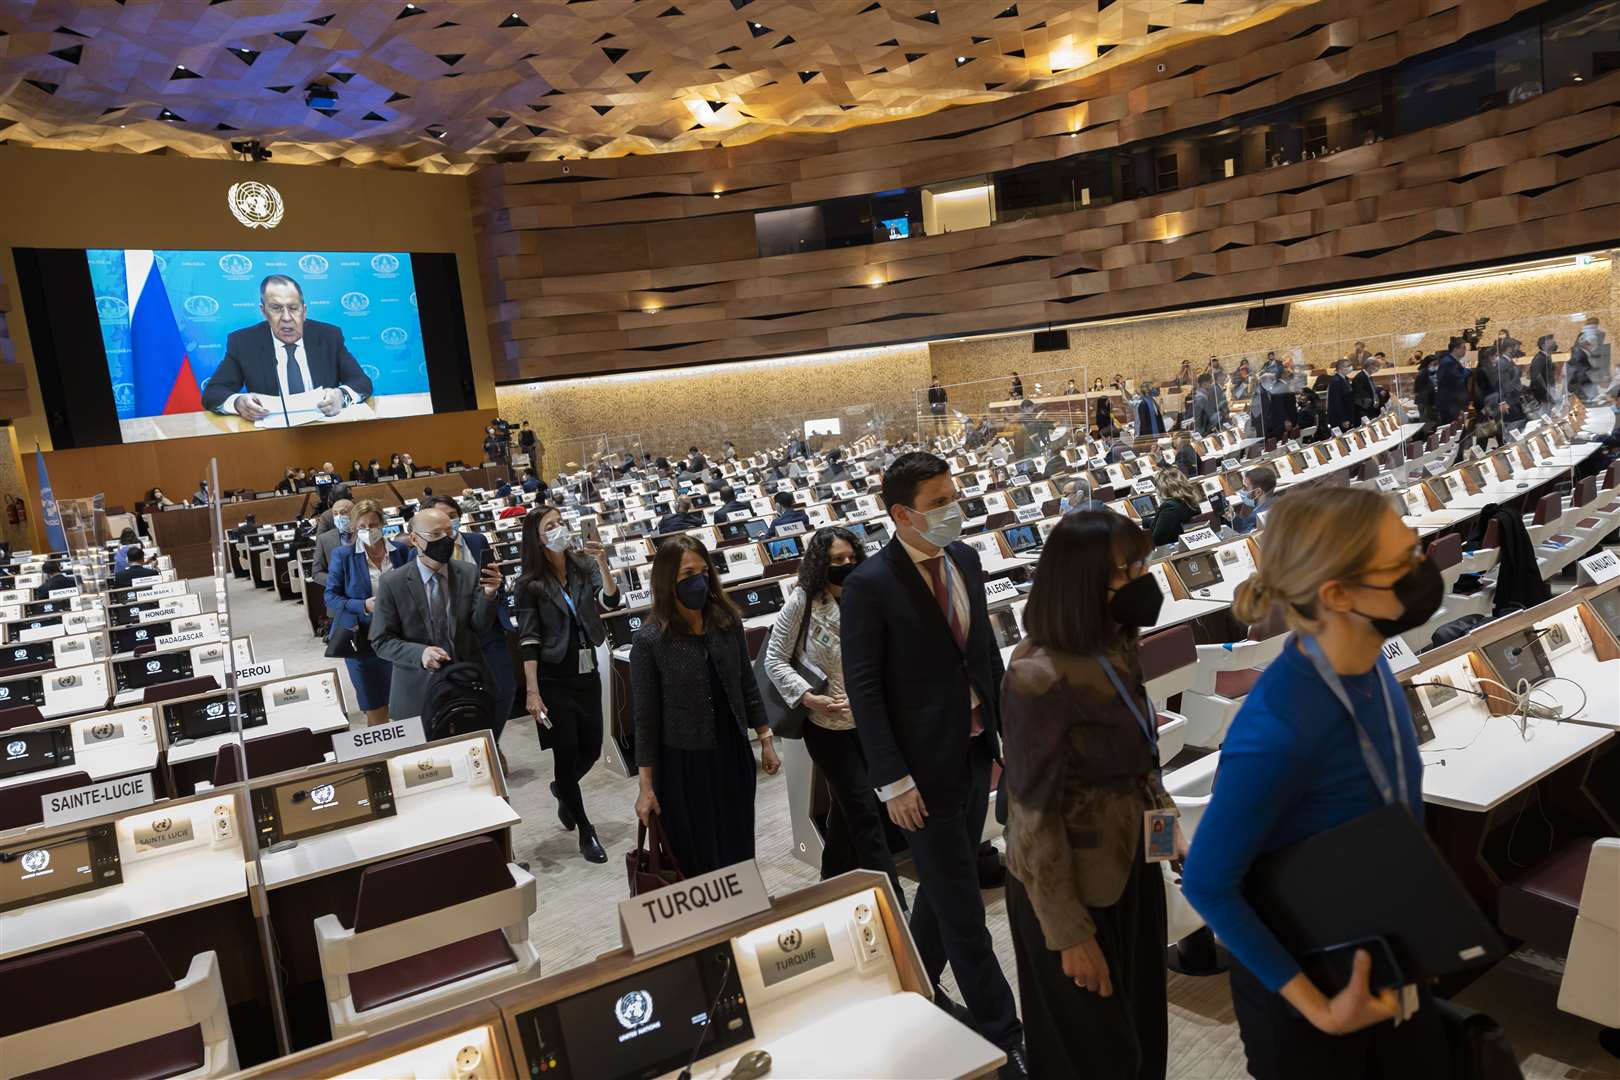 Diplomats leave the room during Sergei Lavrov’s address (Salvatore Di Nolfi/Keystone/AP)